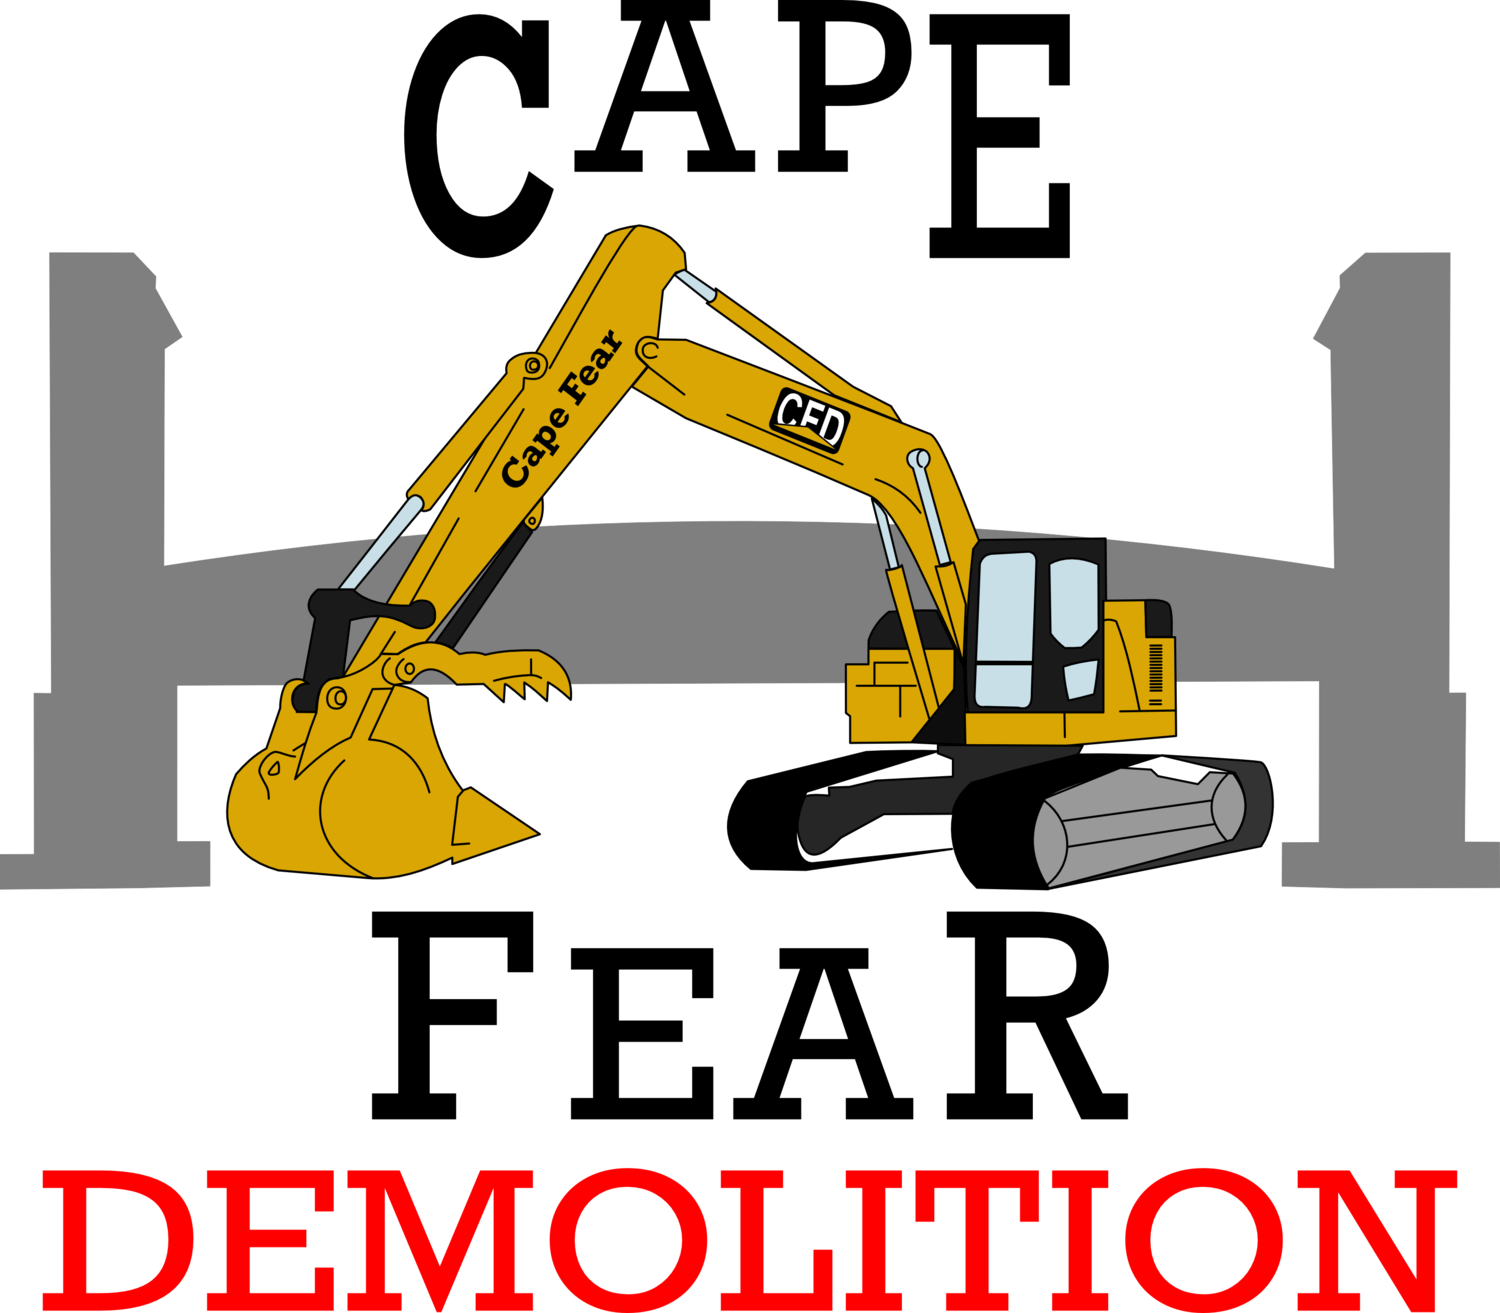 Cape Fear Demolition